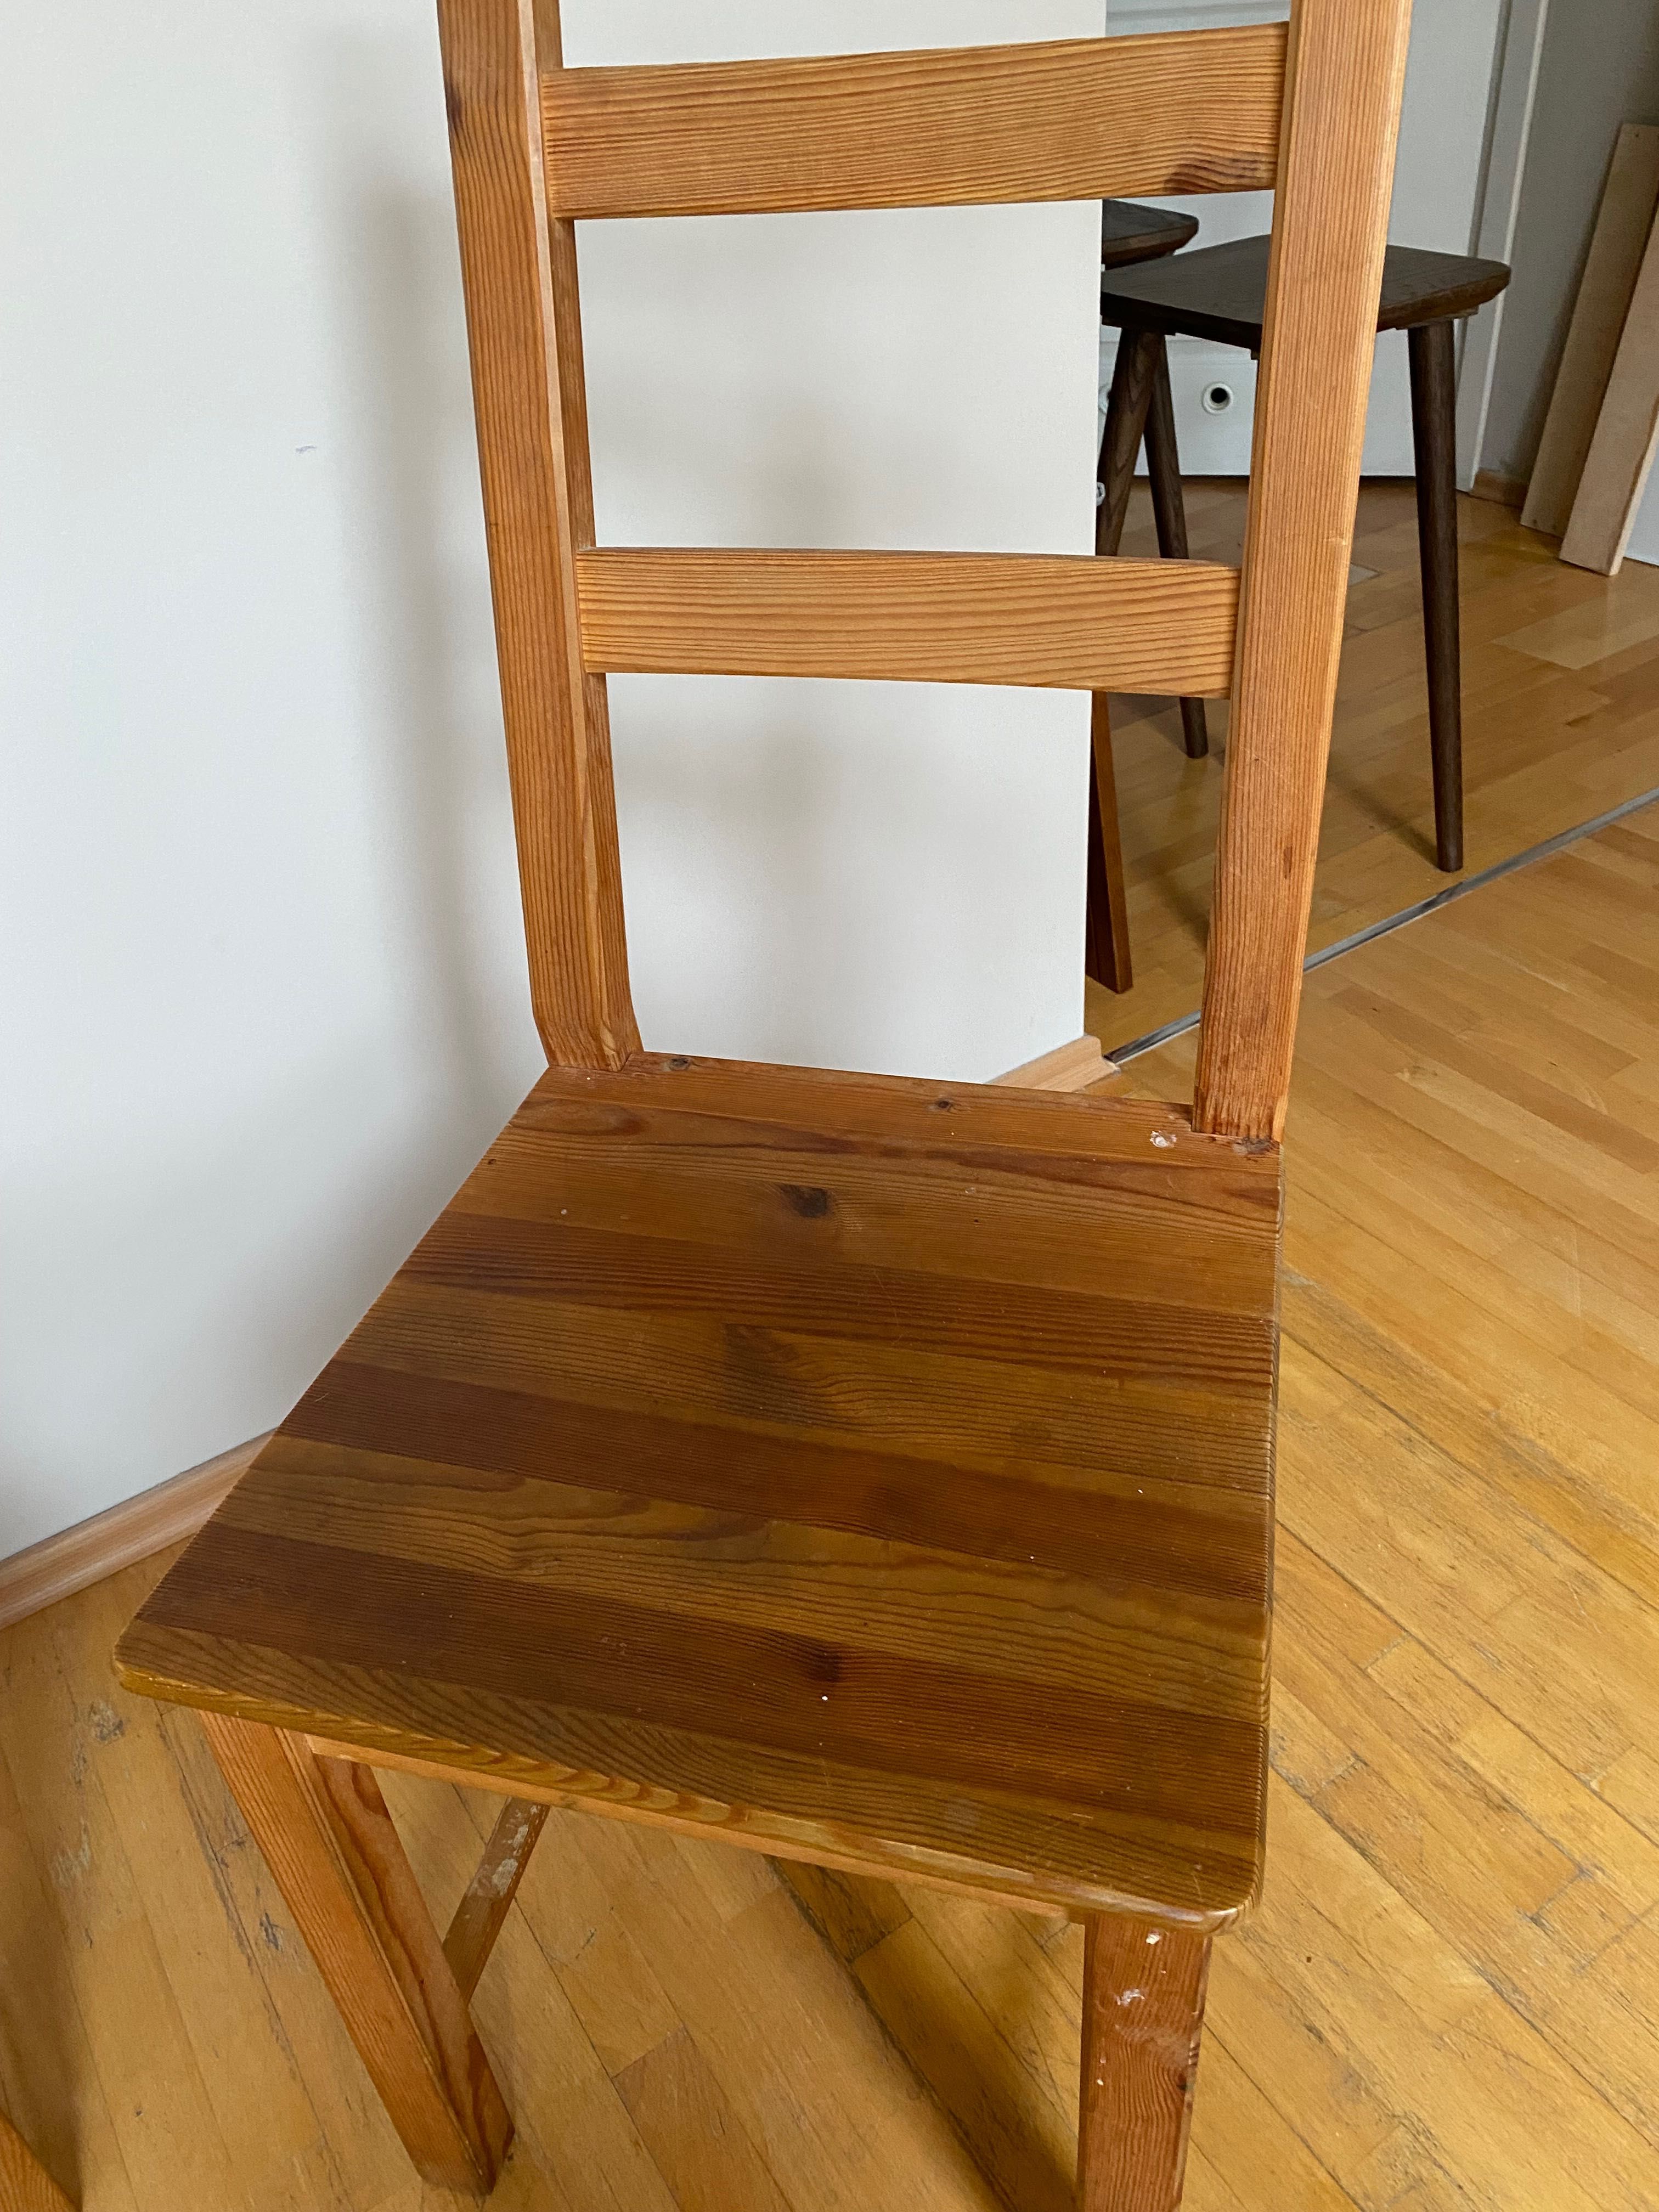 Krzesła sosnowe “IVAR” z ikea